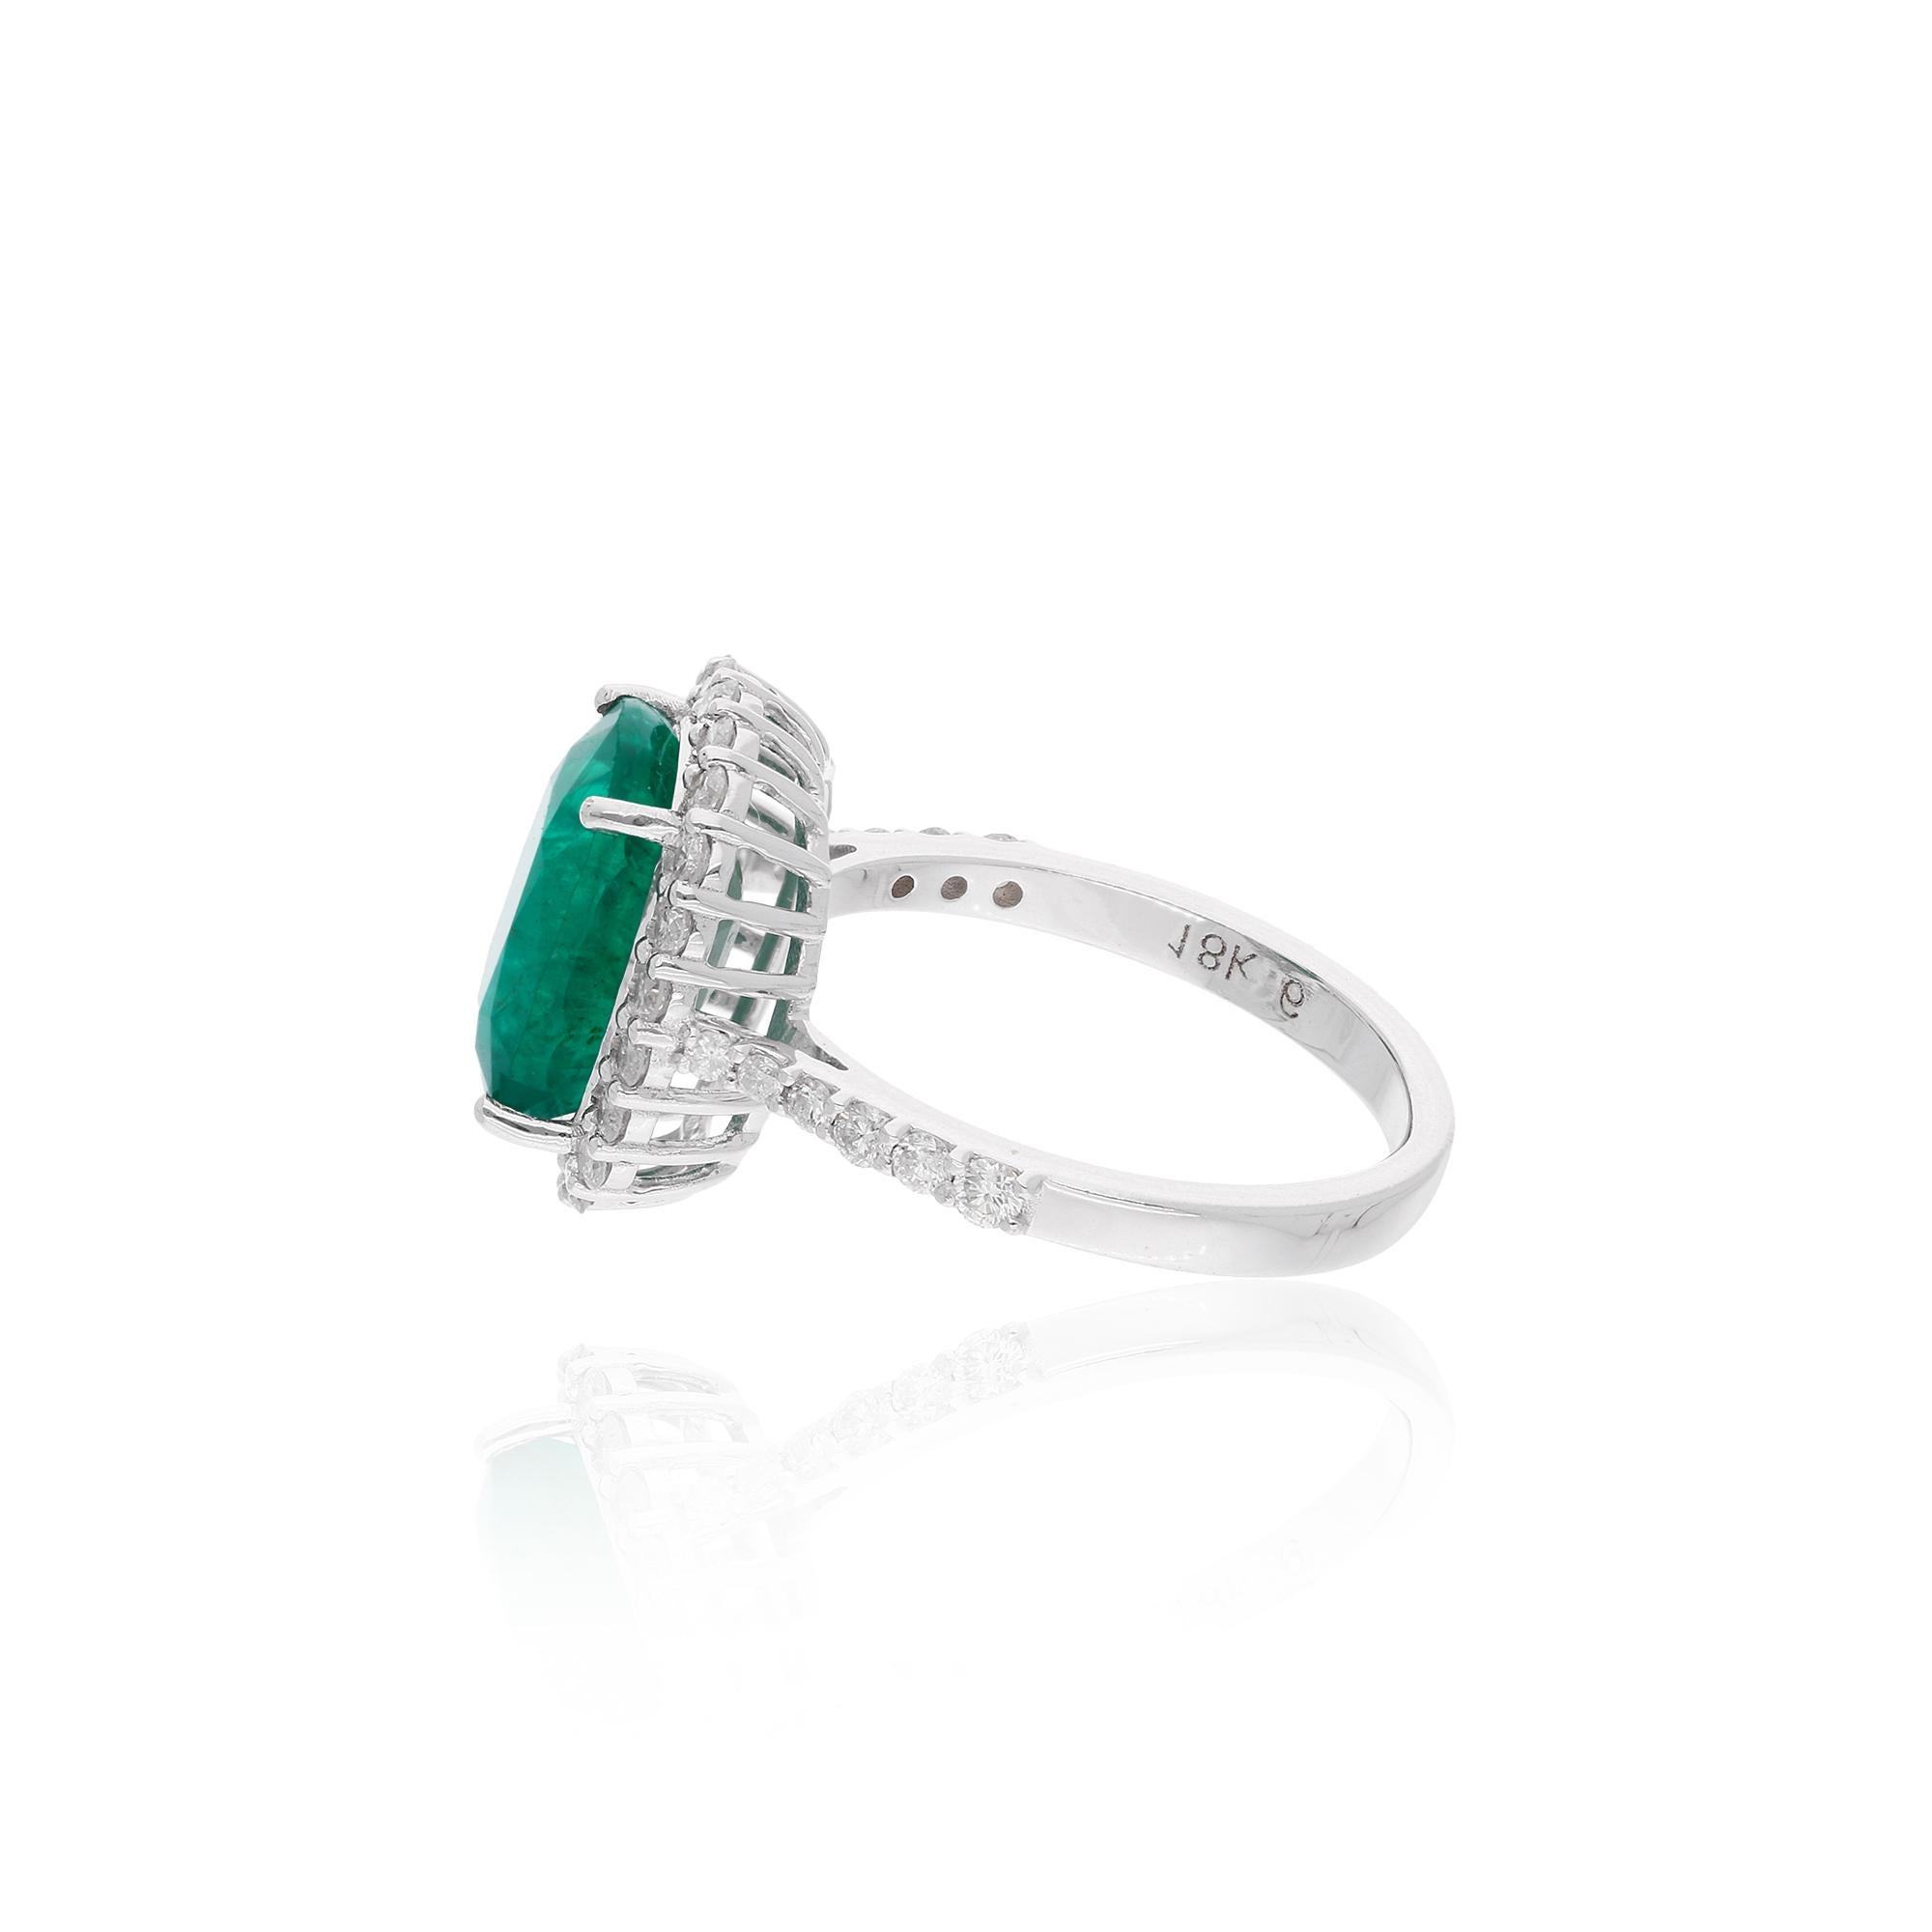 Women's Zambian Emerald Gemstone Cocktail Ring Diamond 18 Kt White Gold Handmade Jewelry For Sale